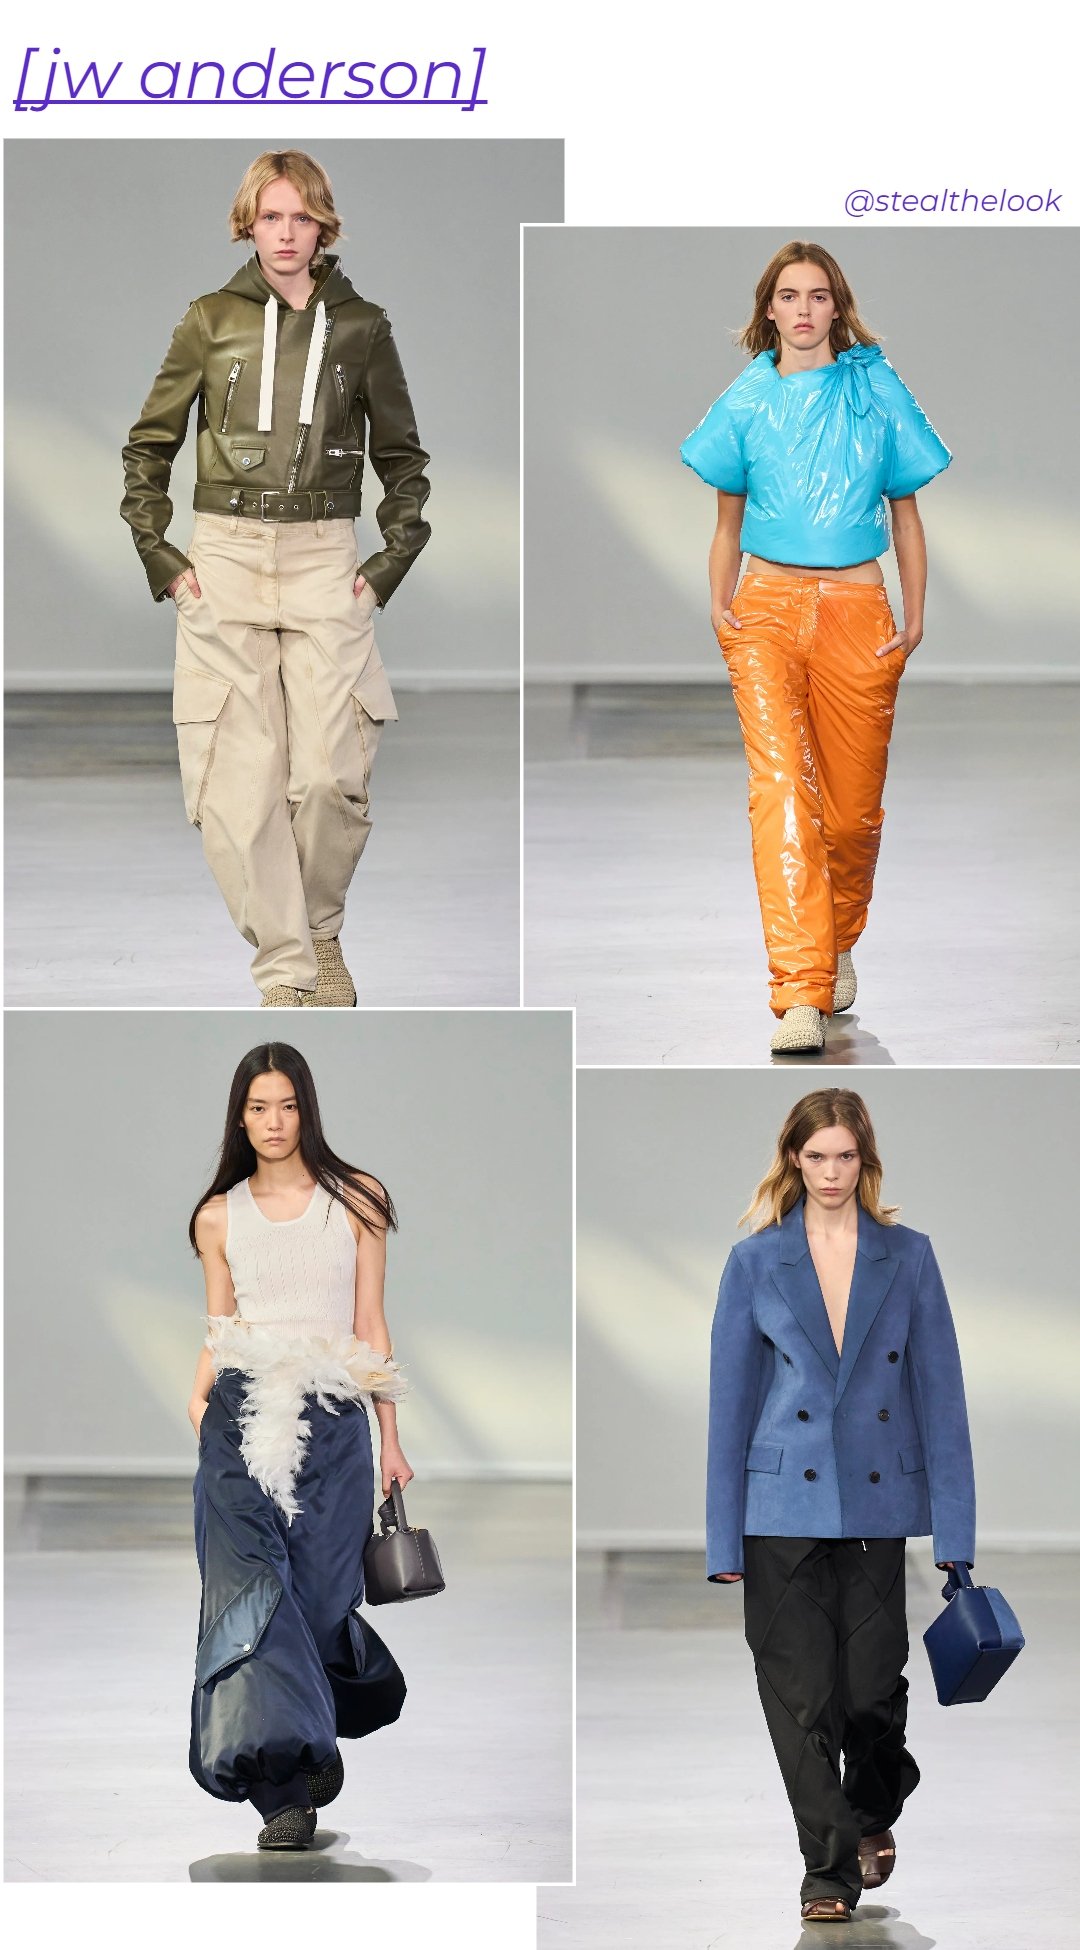 JW Anderson - roupas diversas - London Fashion Week - primavera - colagem de imagens - https://stealthelook.com.br